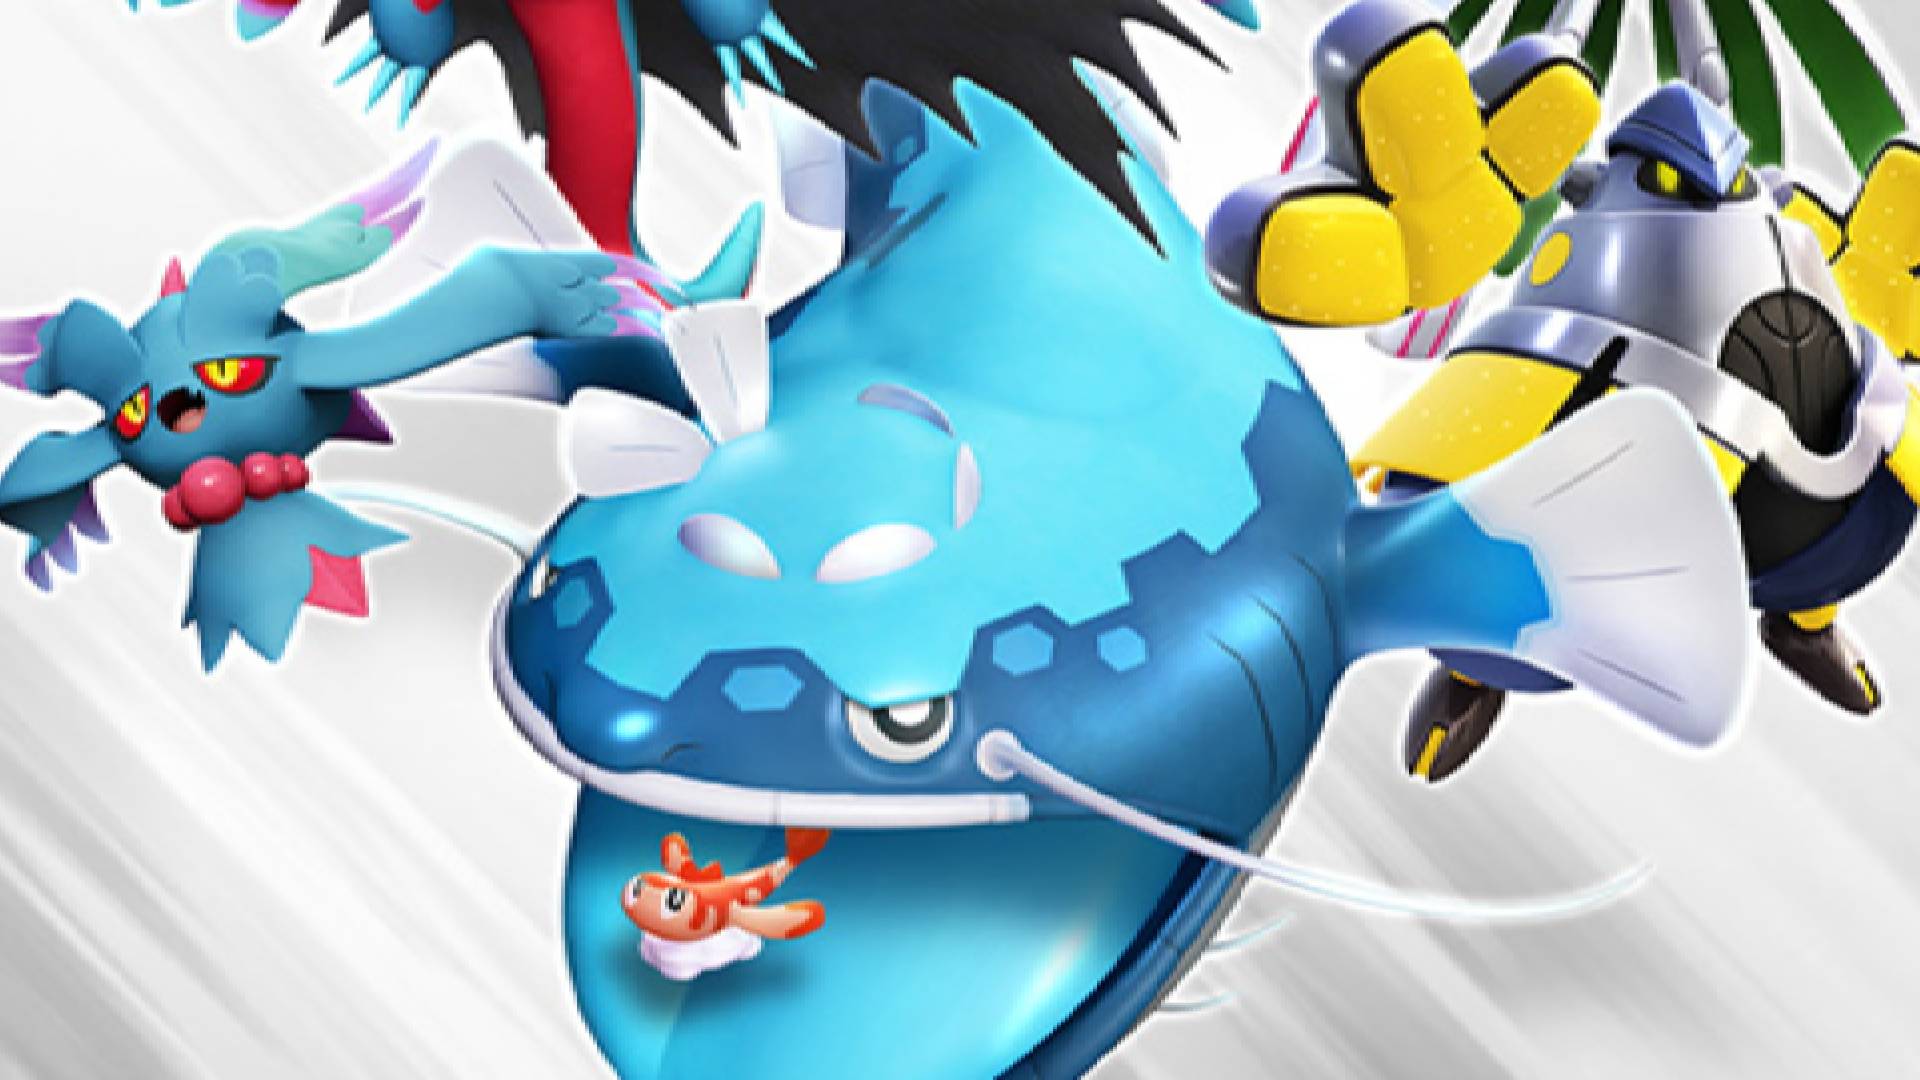 Pokémon: Every Shiny Legendary Form Change, Ranked